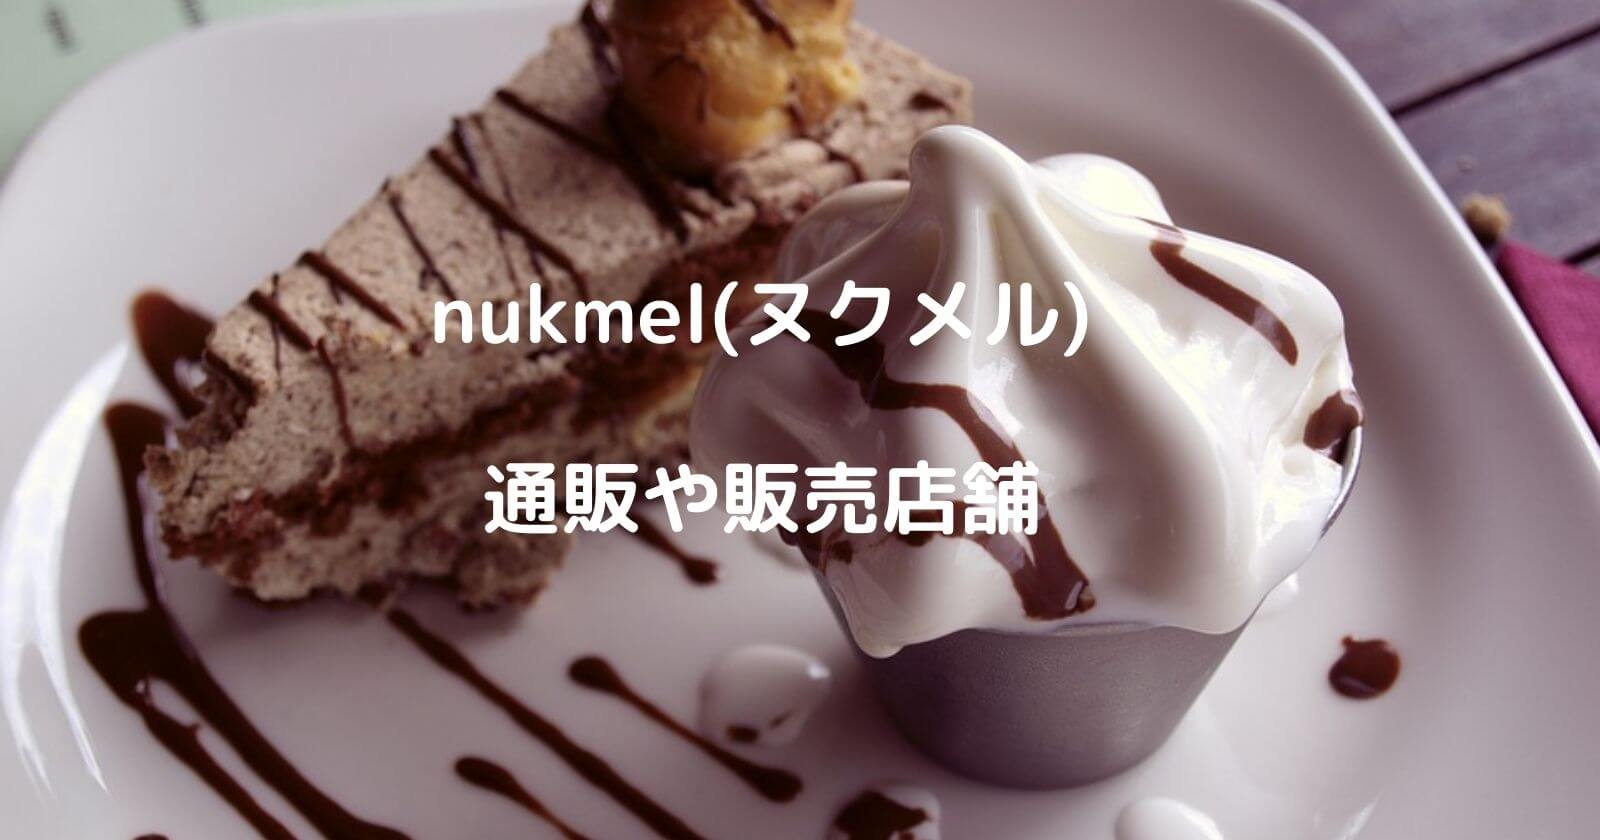 nukmel(ヌクメル)の通販や販売店舗、口コミなどをご紹介